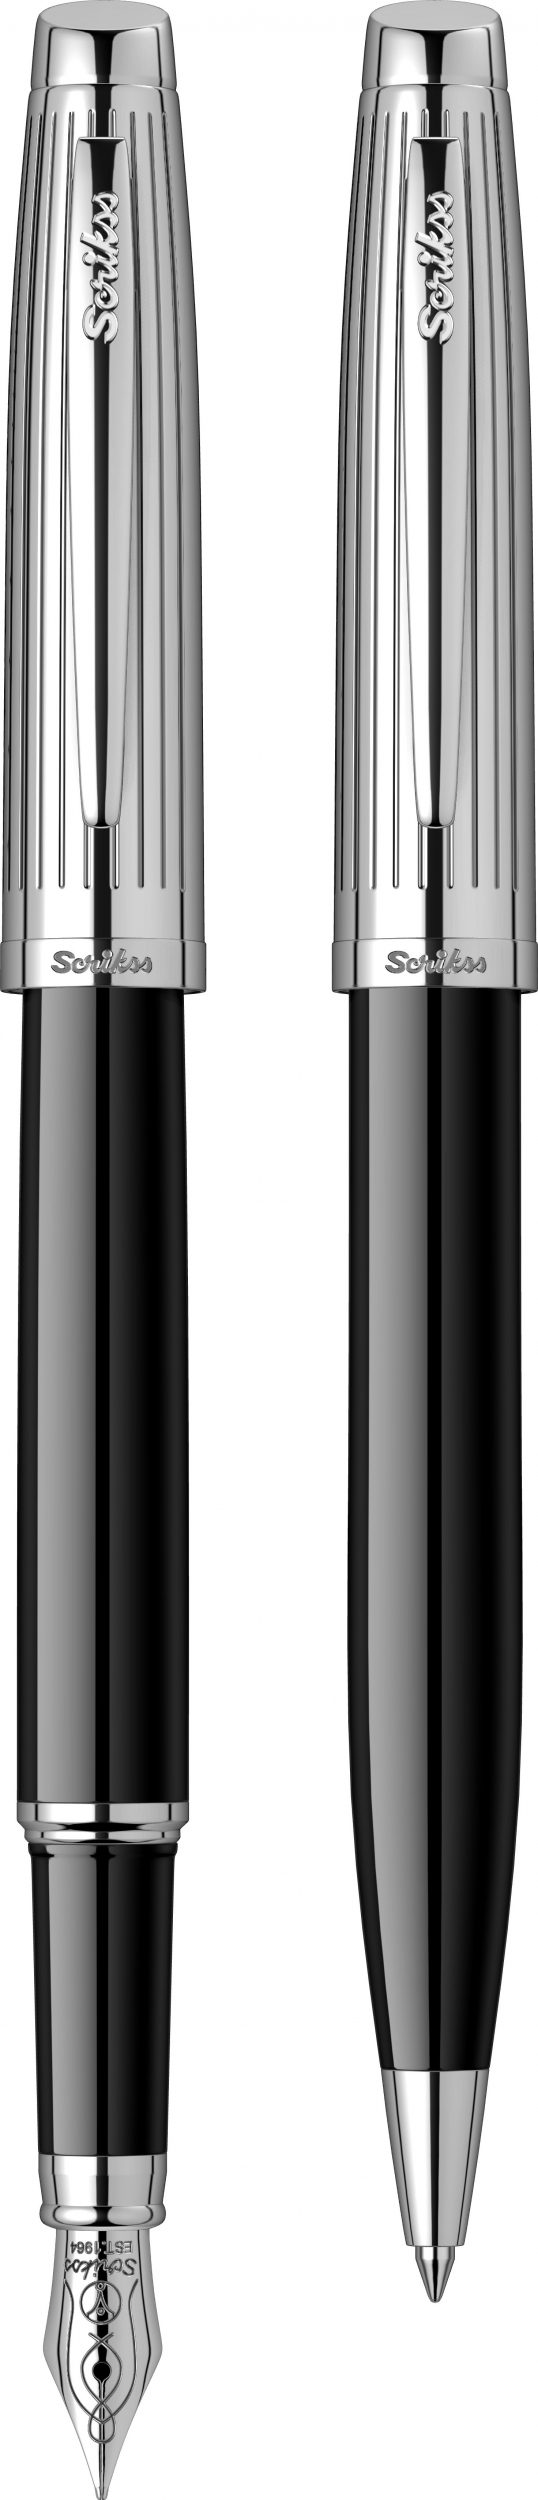 Двоен комплект Scrikss - Химикалка Oscar 39., модел 66864,  Черен хром